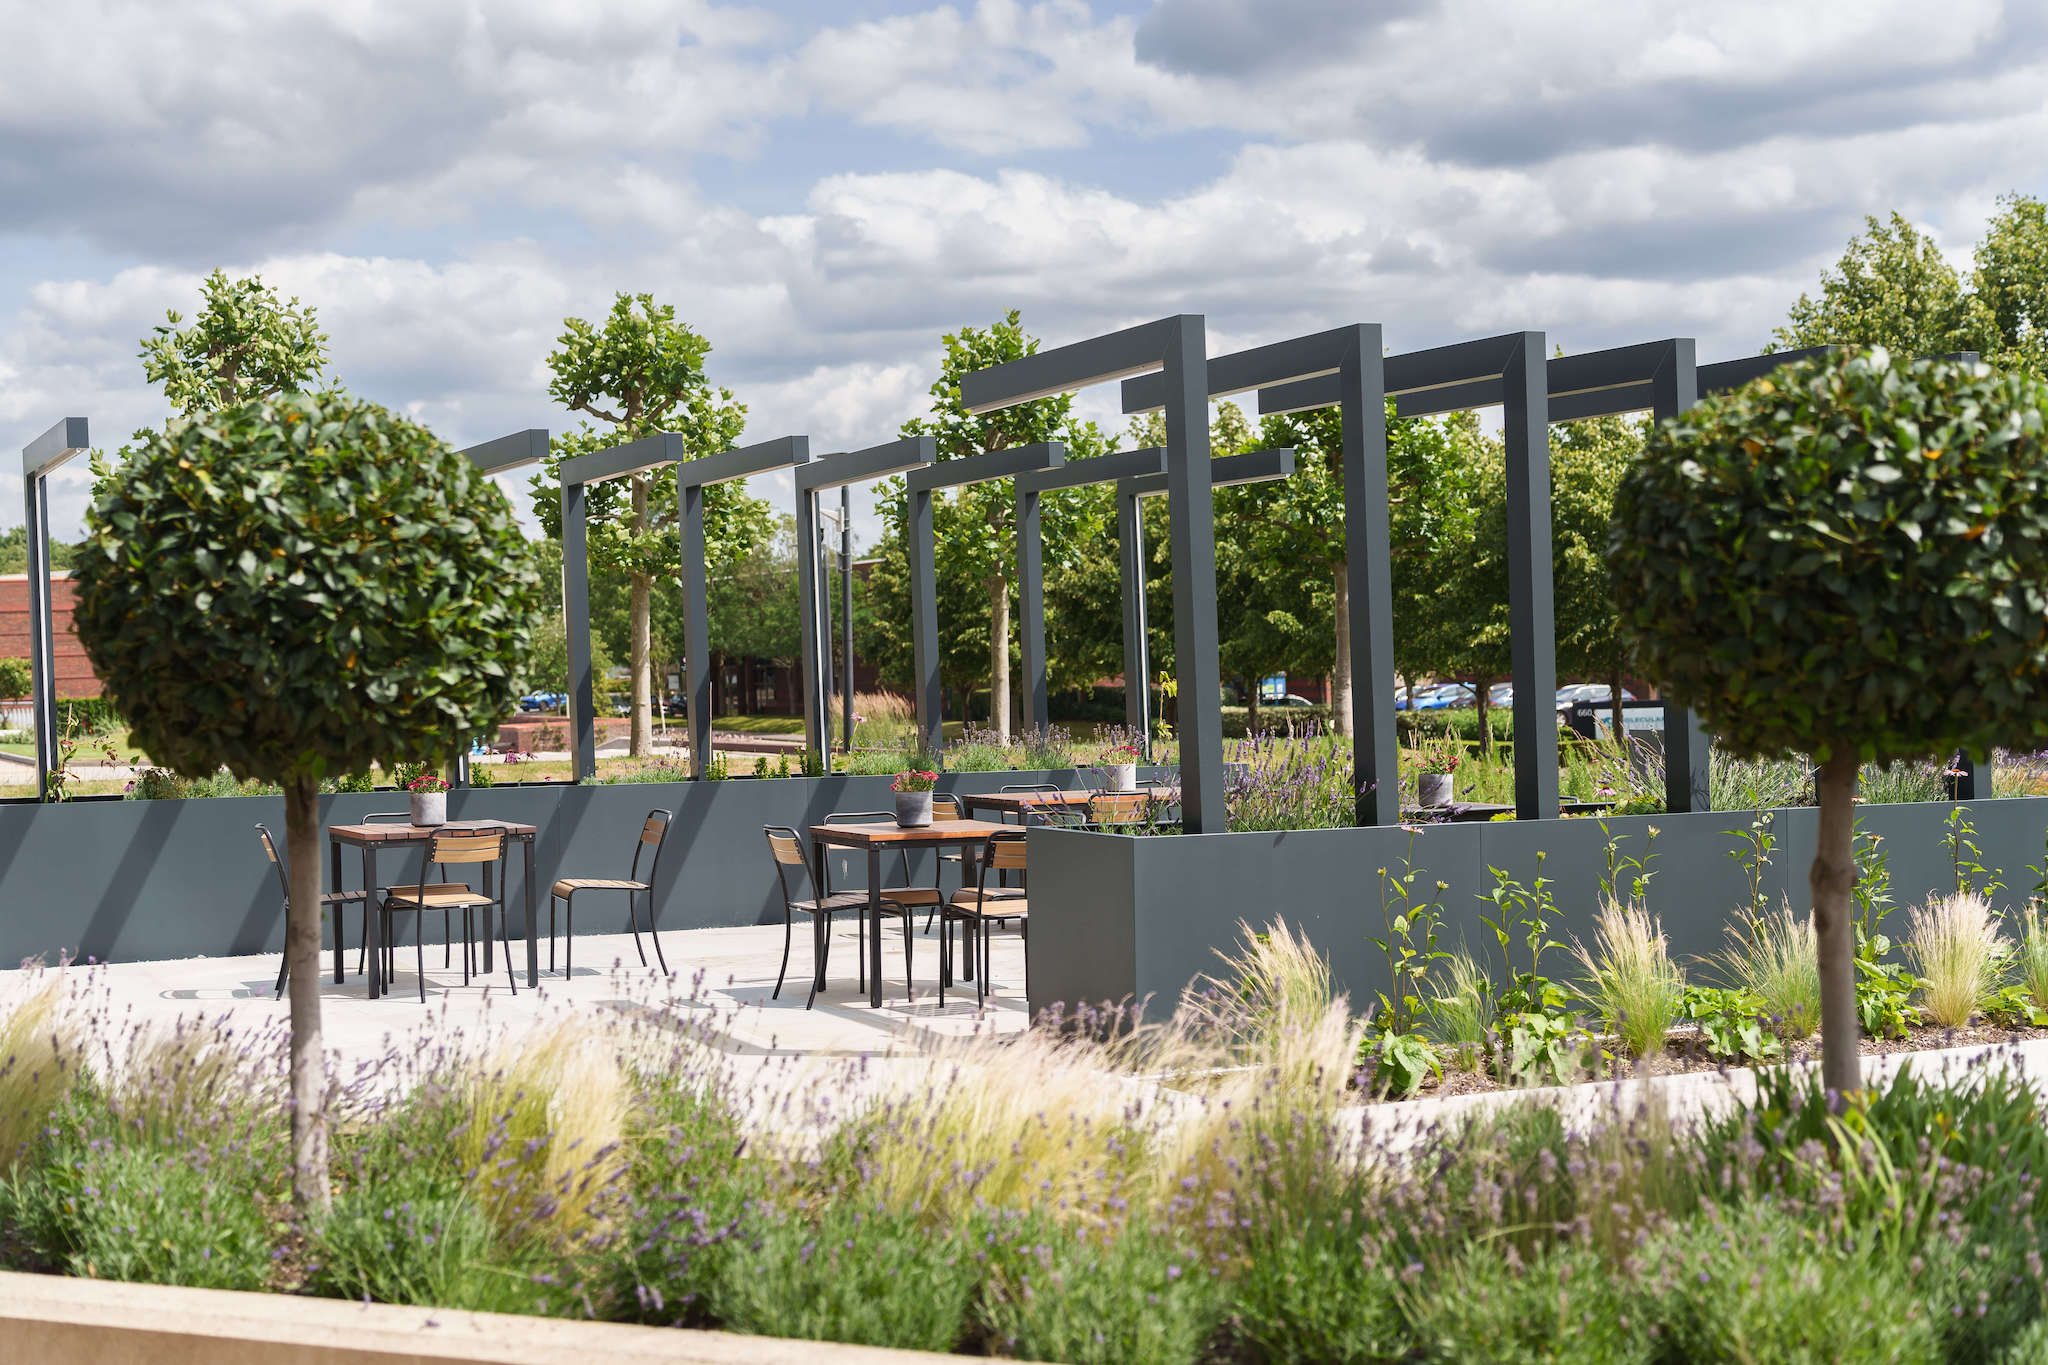 ASA 1180 Podium Landscape At Winnersh Business Park Opens To The Public